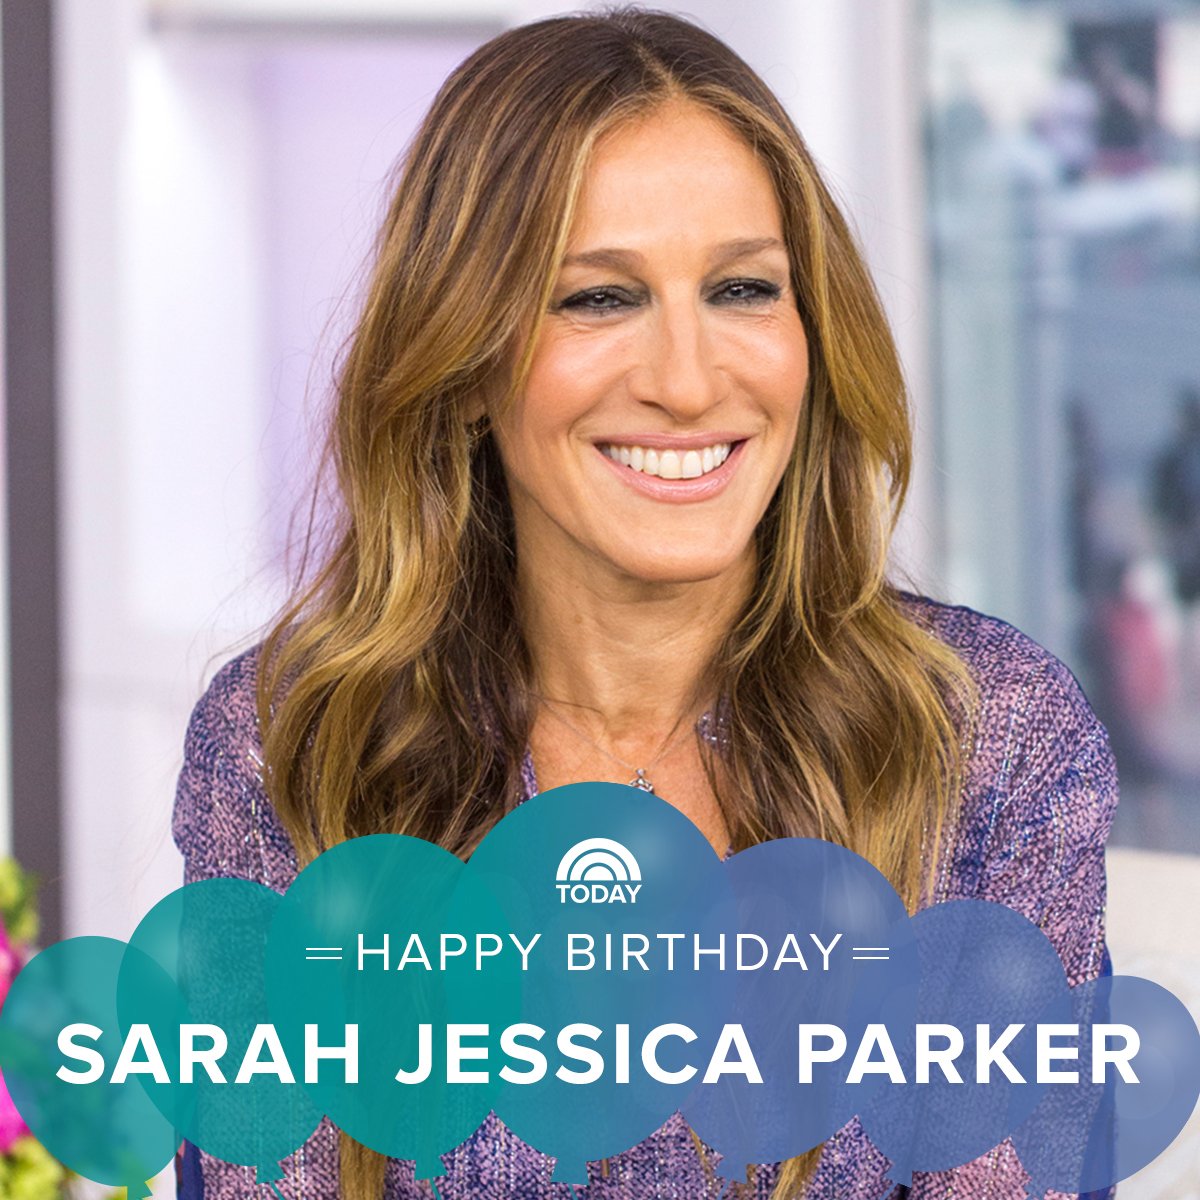 Happy birthday, Sarah Jessica Parker!  